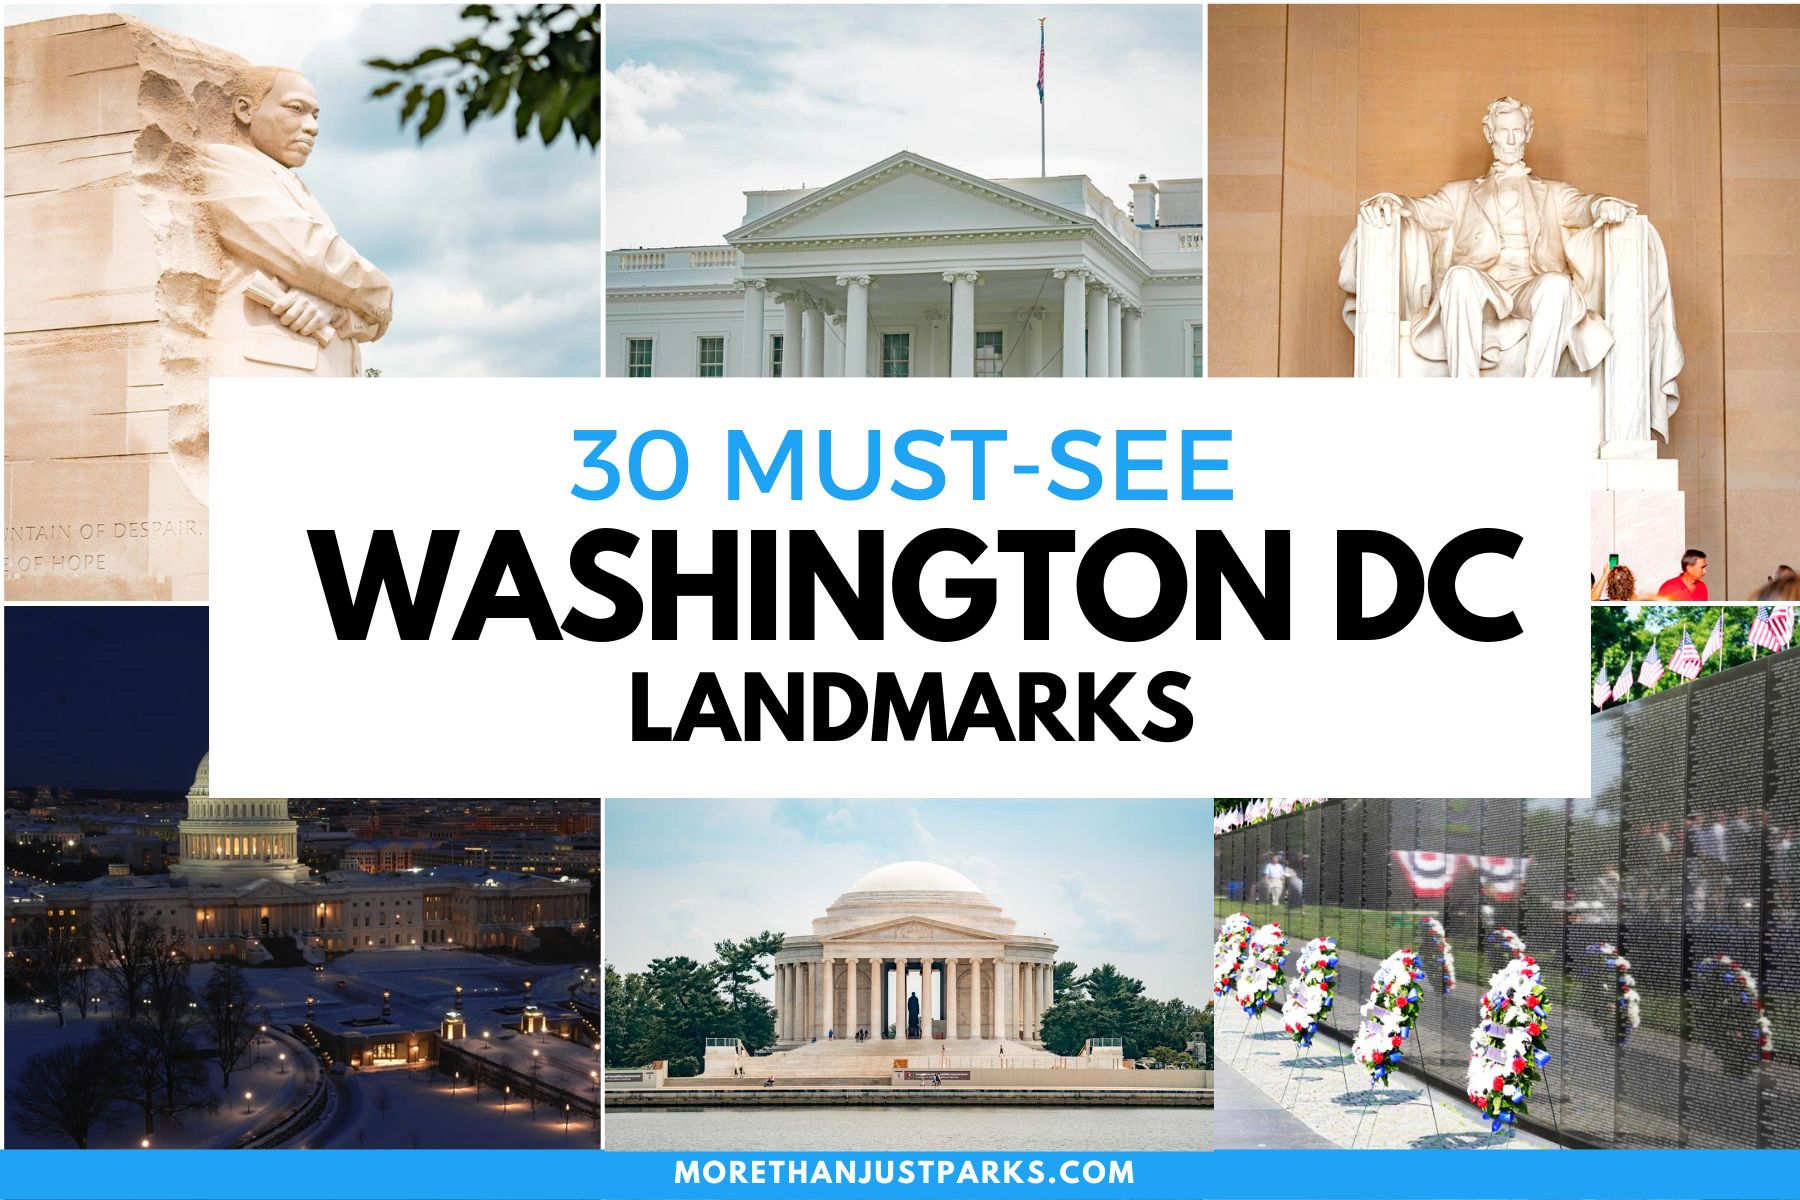 Washington D.C. Landmarks